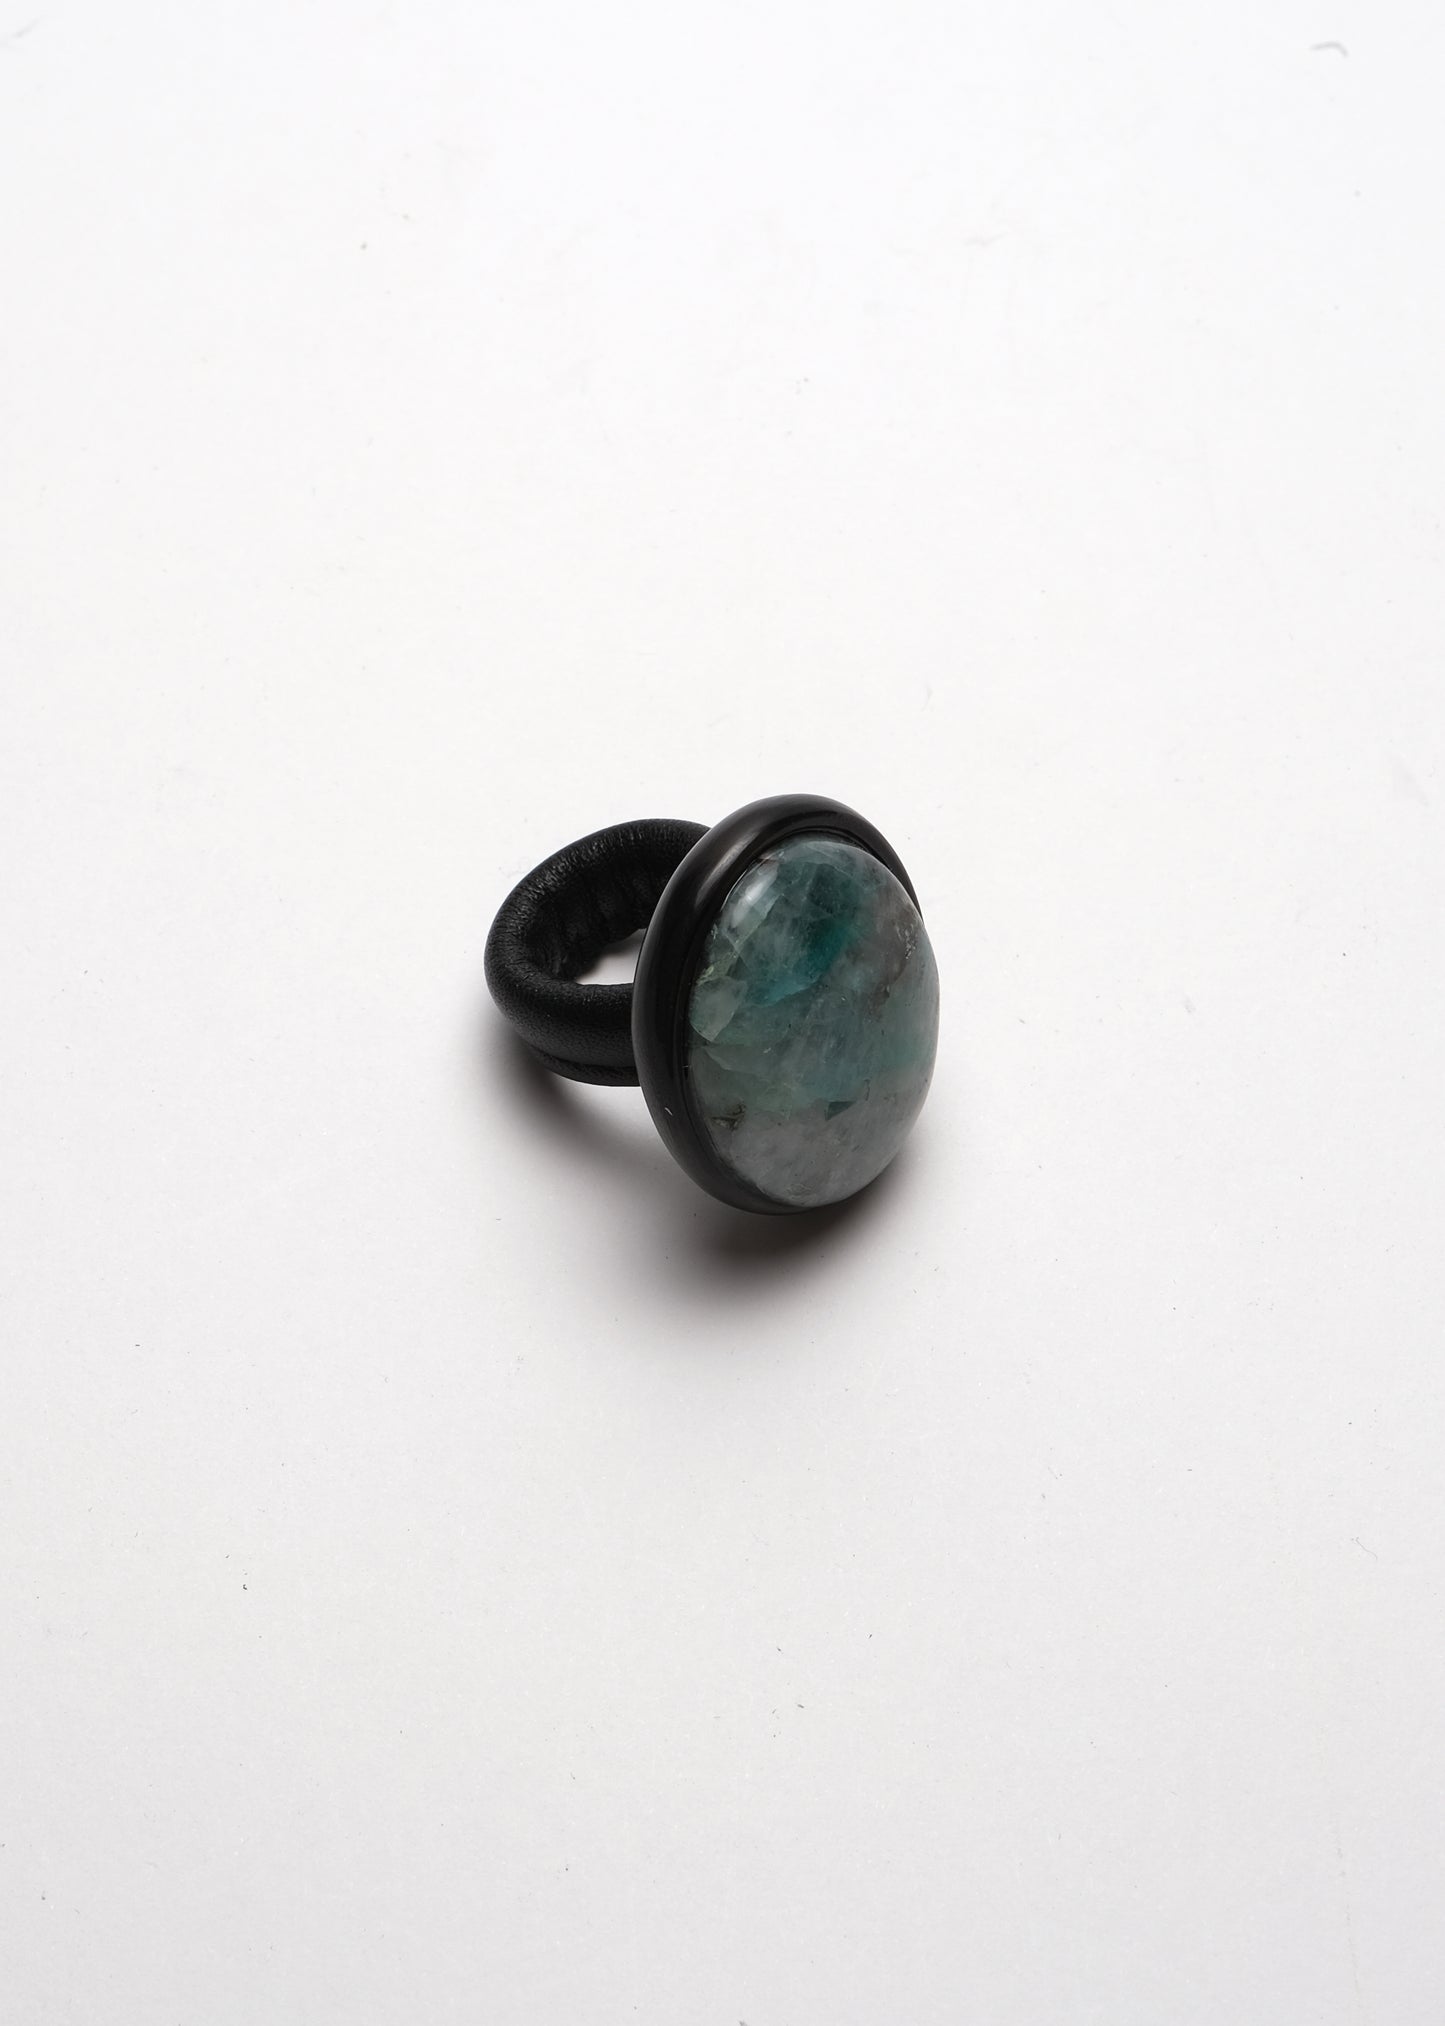 Monies Ring: chrysocolla quartz, horn, leather